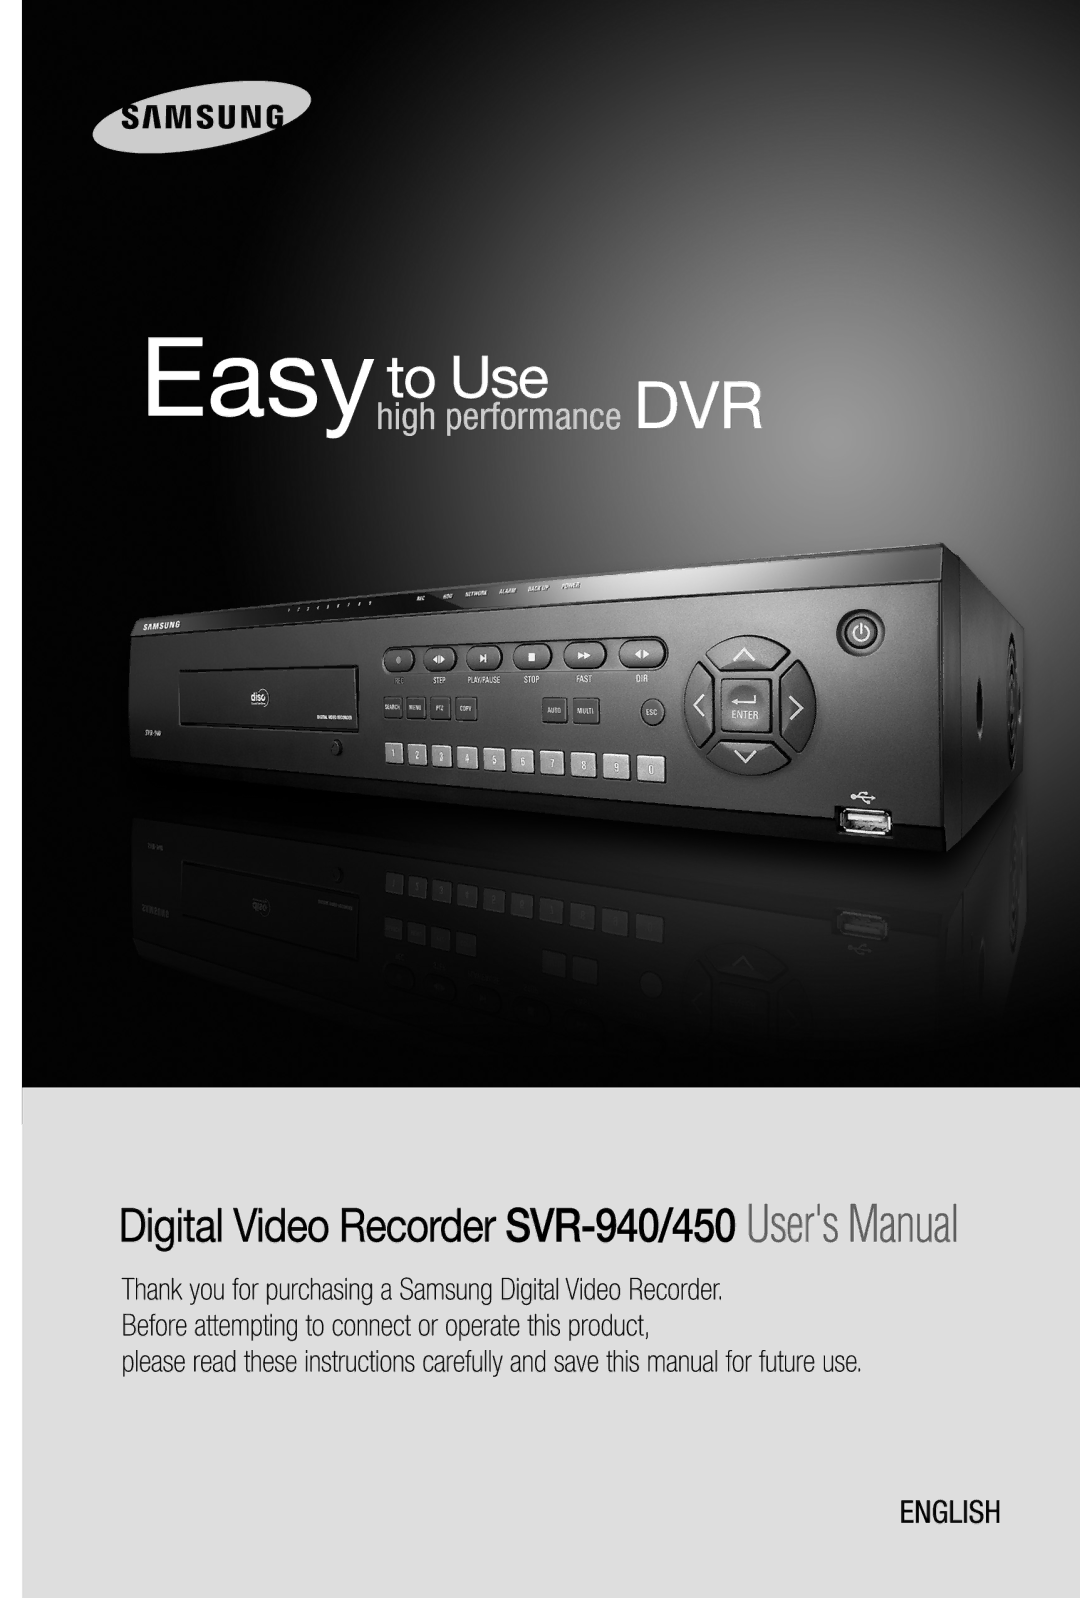 Samsung 450, SVR-940 user manual Digital Video Recorder 1 User’s Manual 